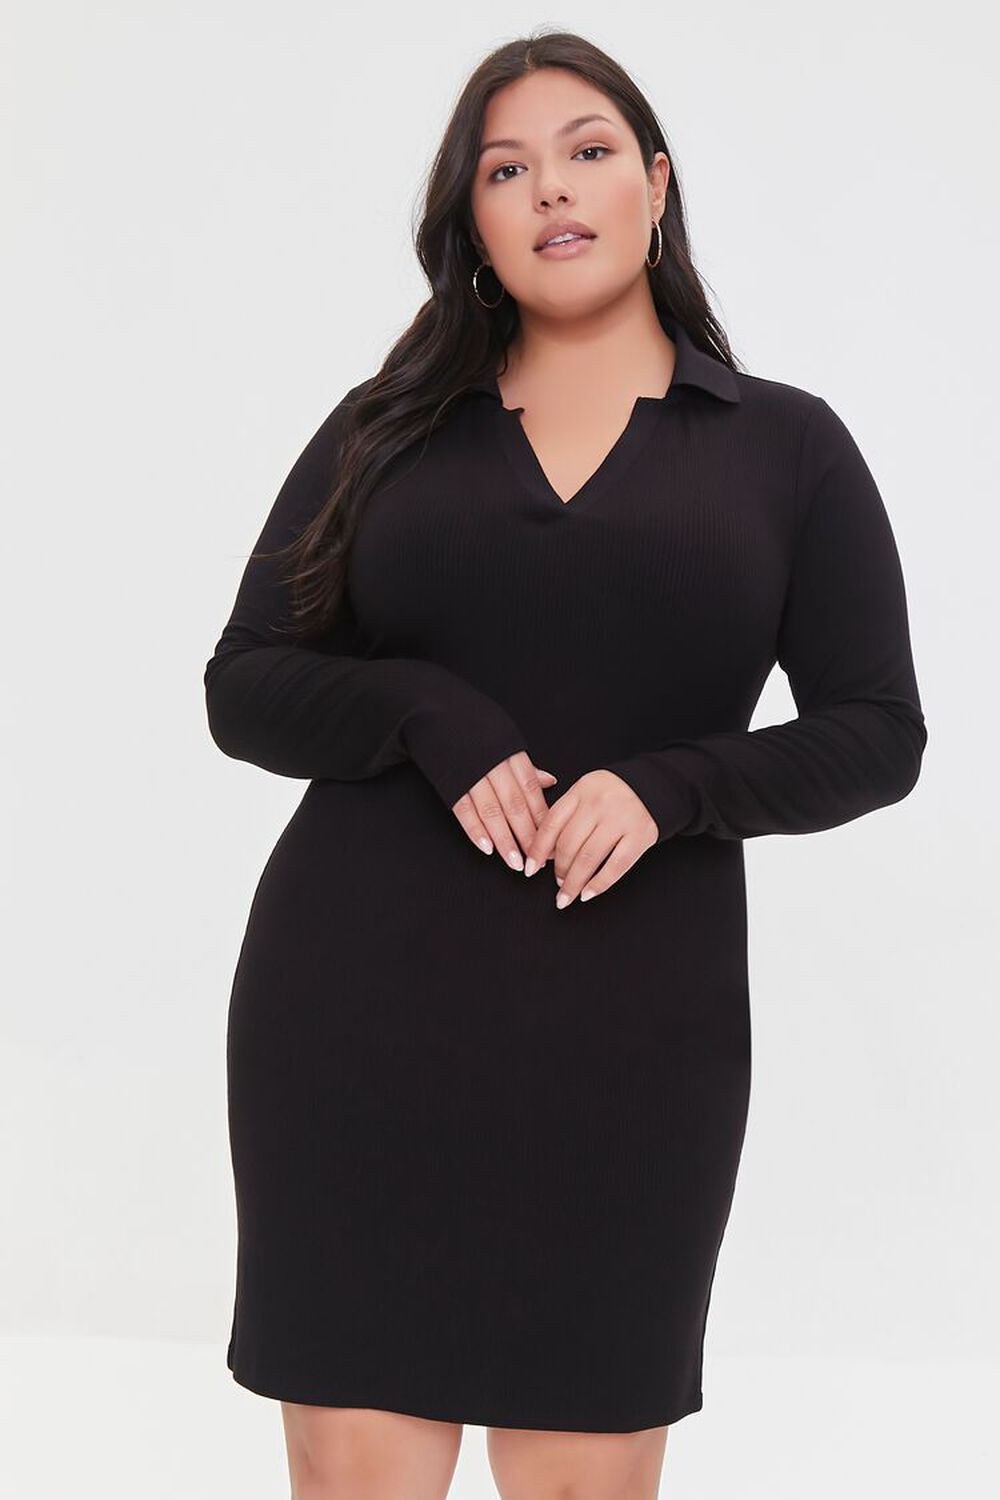 BLACK Plus Size Bodycon Mini Dress, image 1